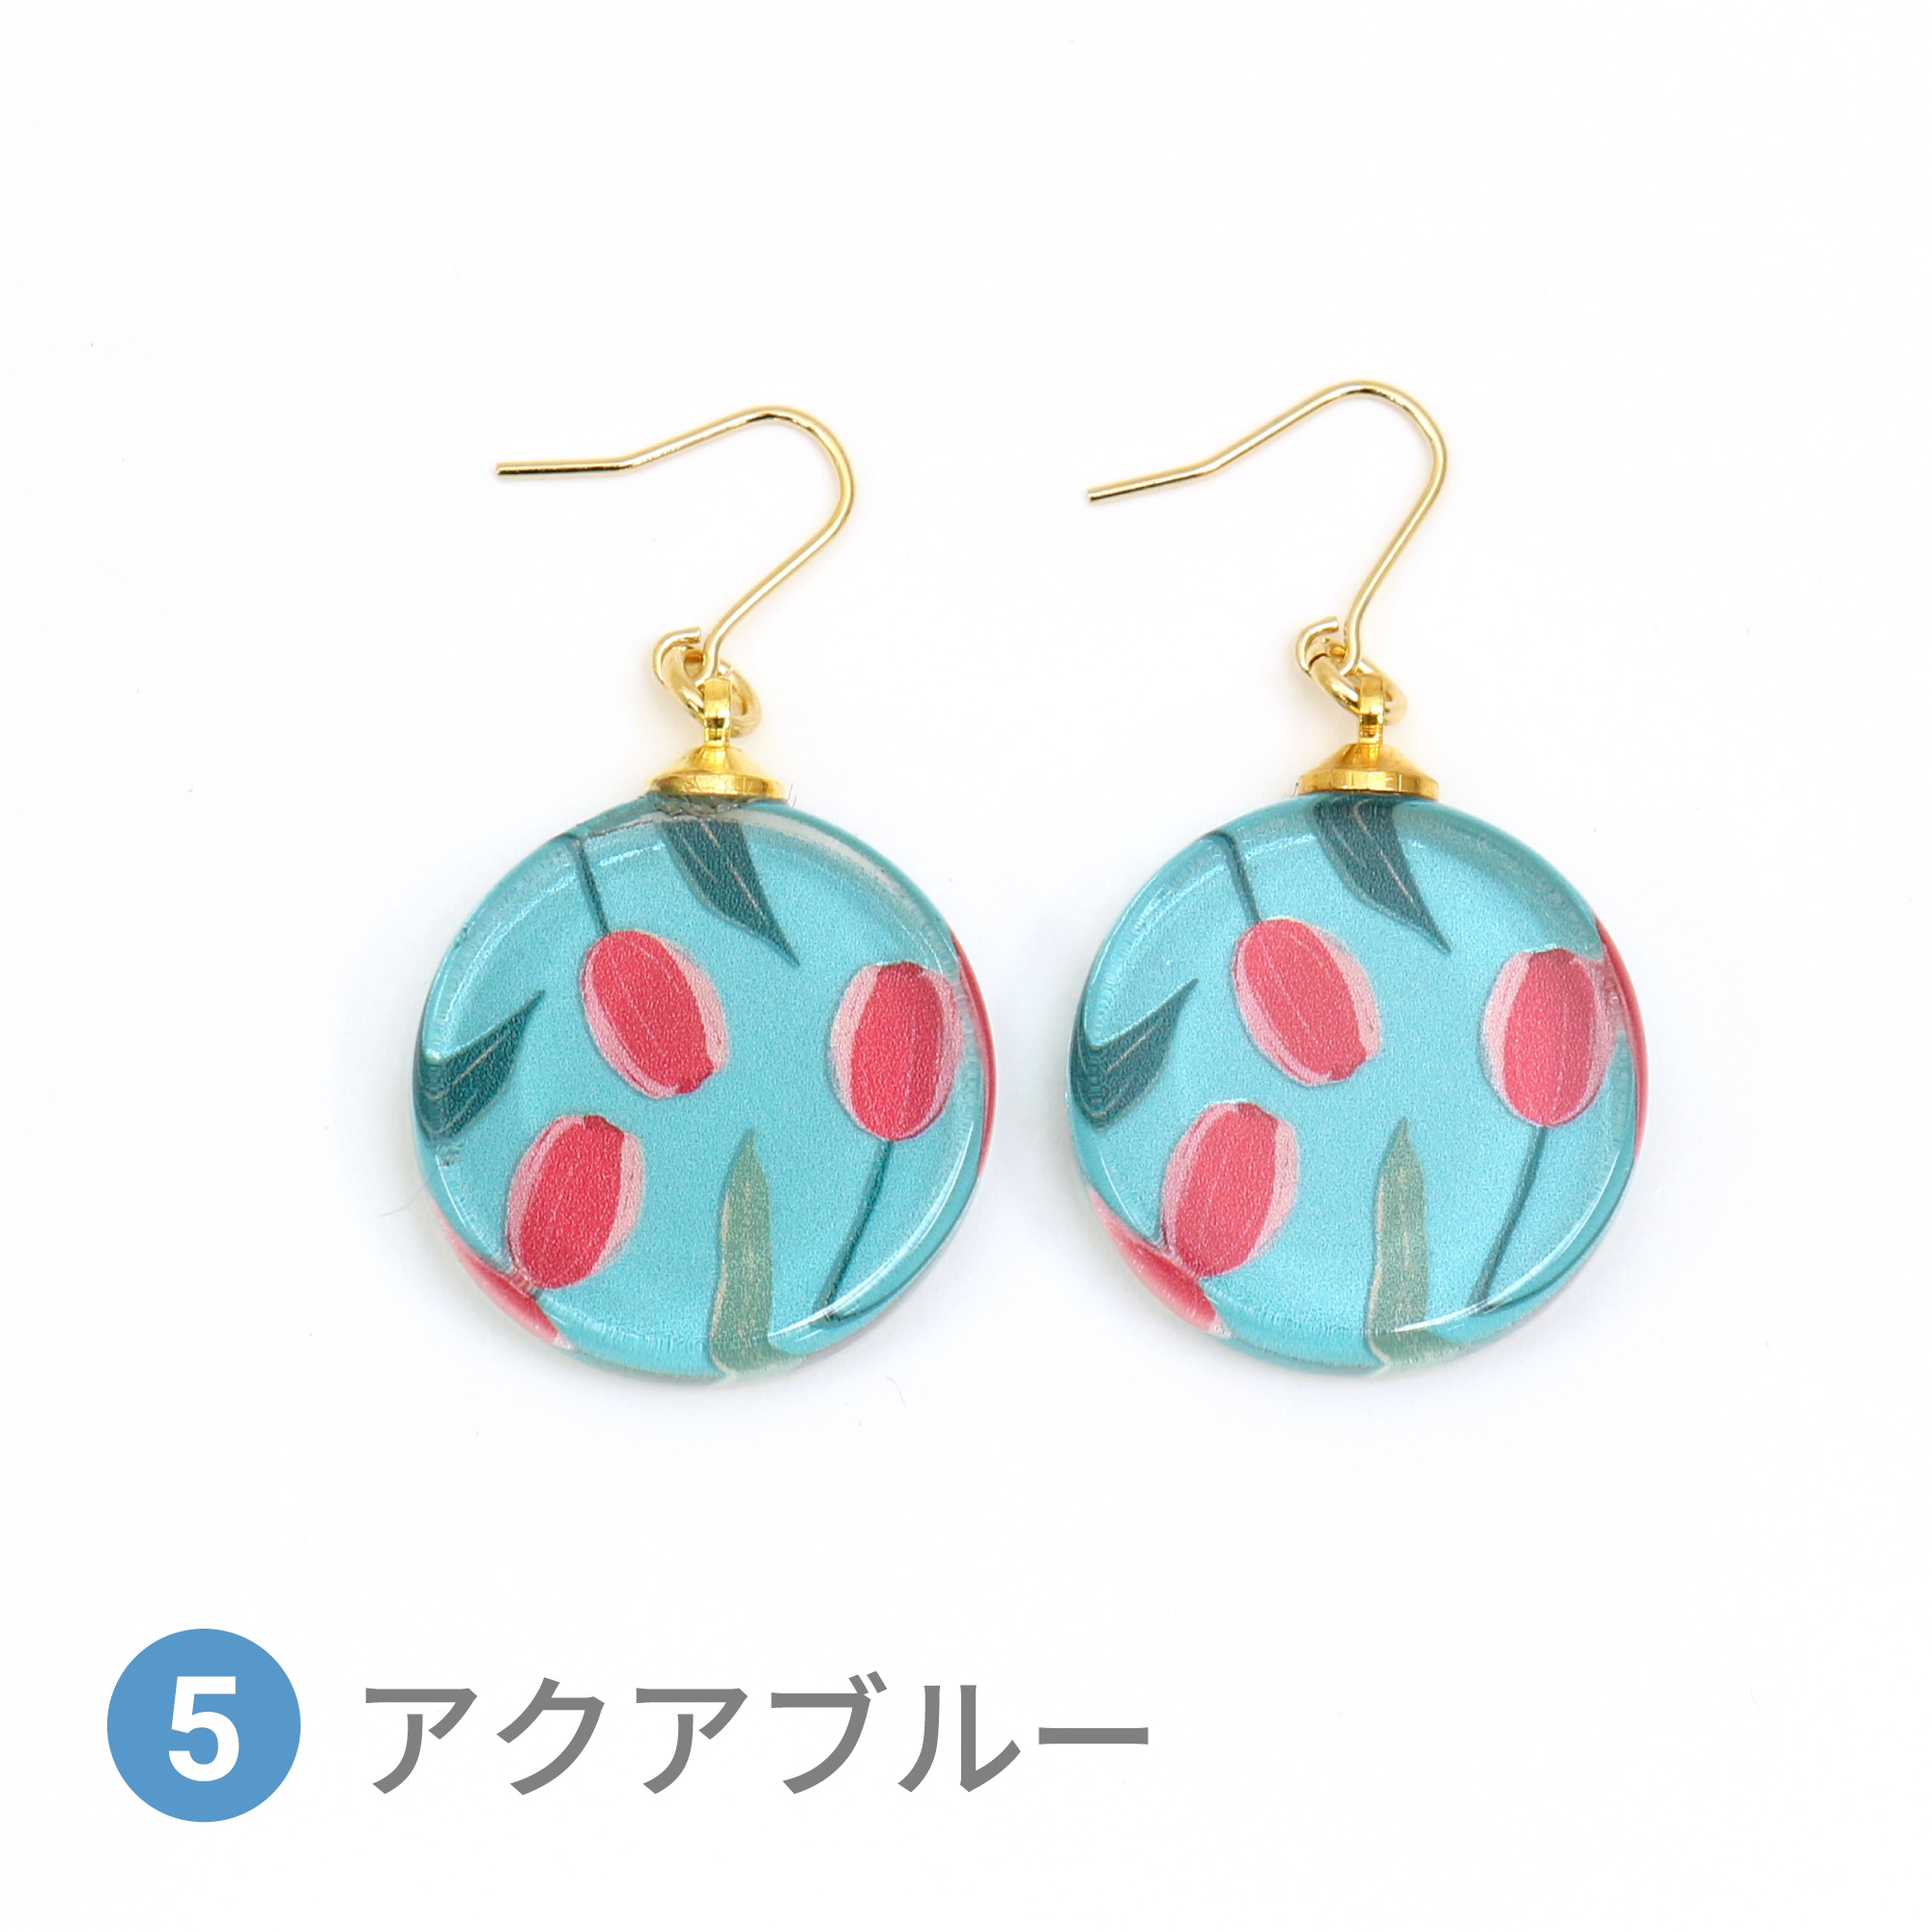 Glass accessories Pierced Earring TULIP aquablue round shape